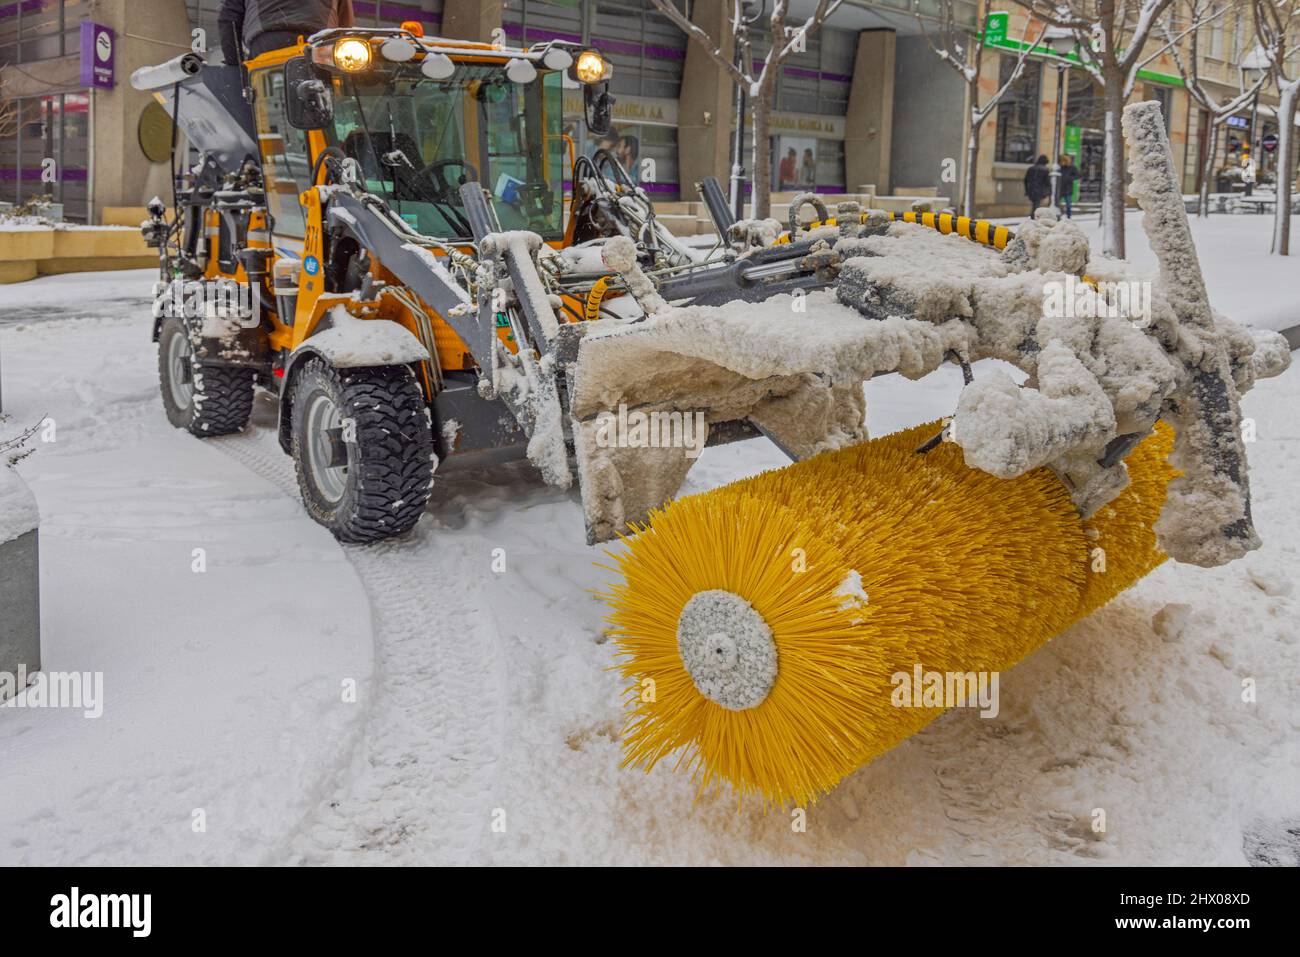 https://c8.alamy.com/comp/2HX08XD/belgrade-serbia-january-22-2022-power-brush-machine-snow-removal-city-street-cleaning-2HX08XD.jpg